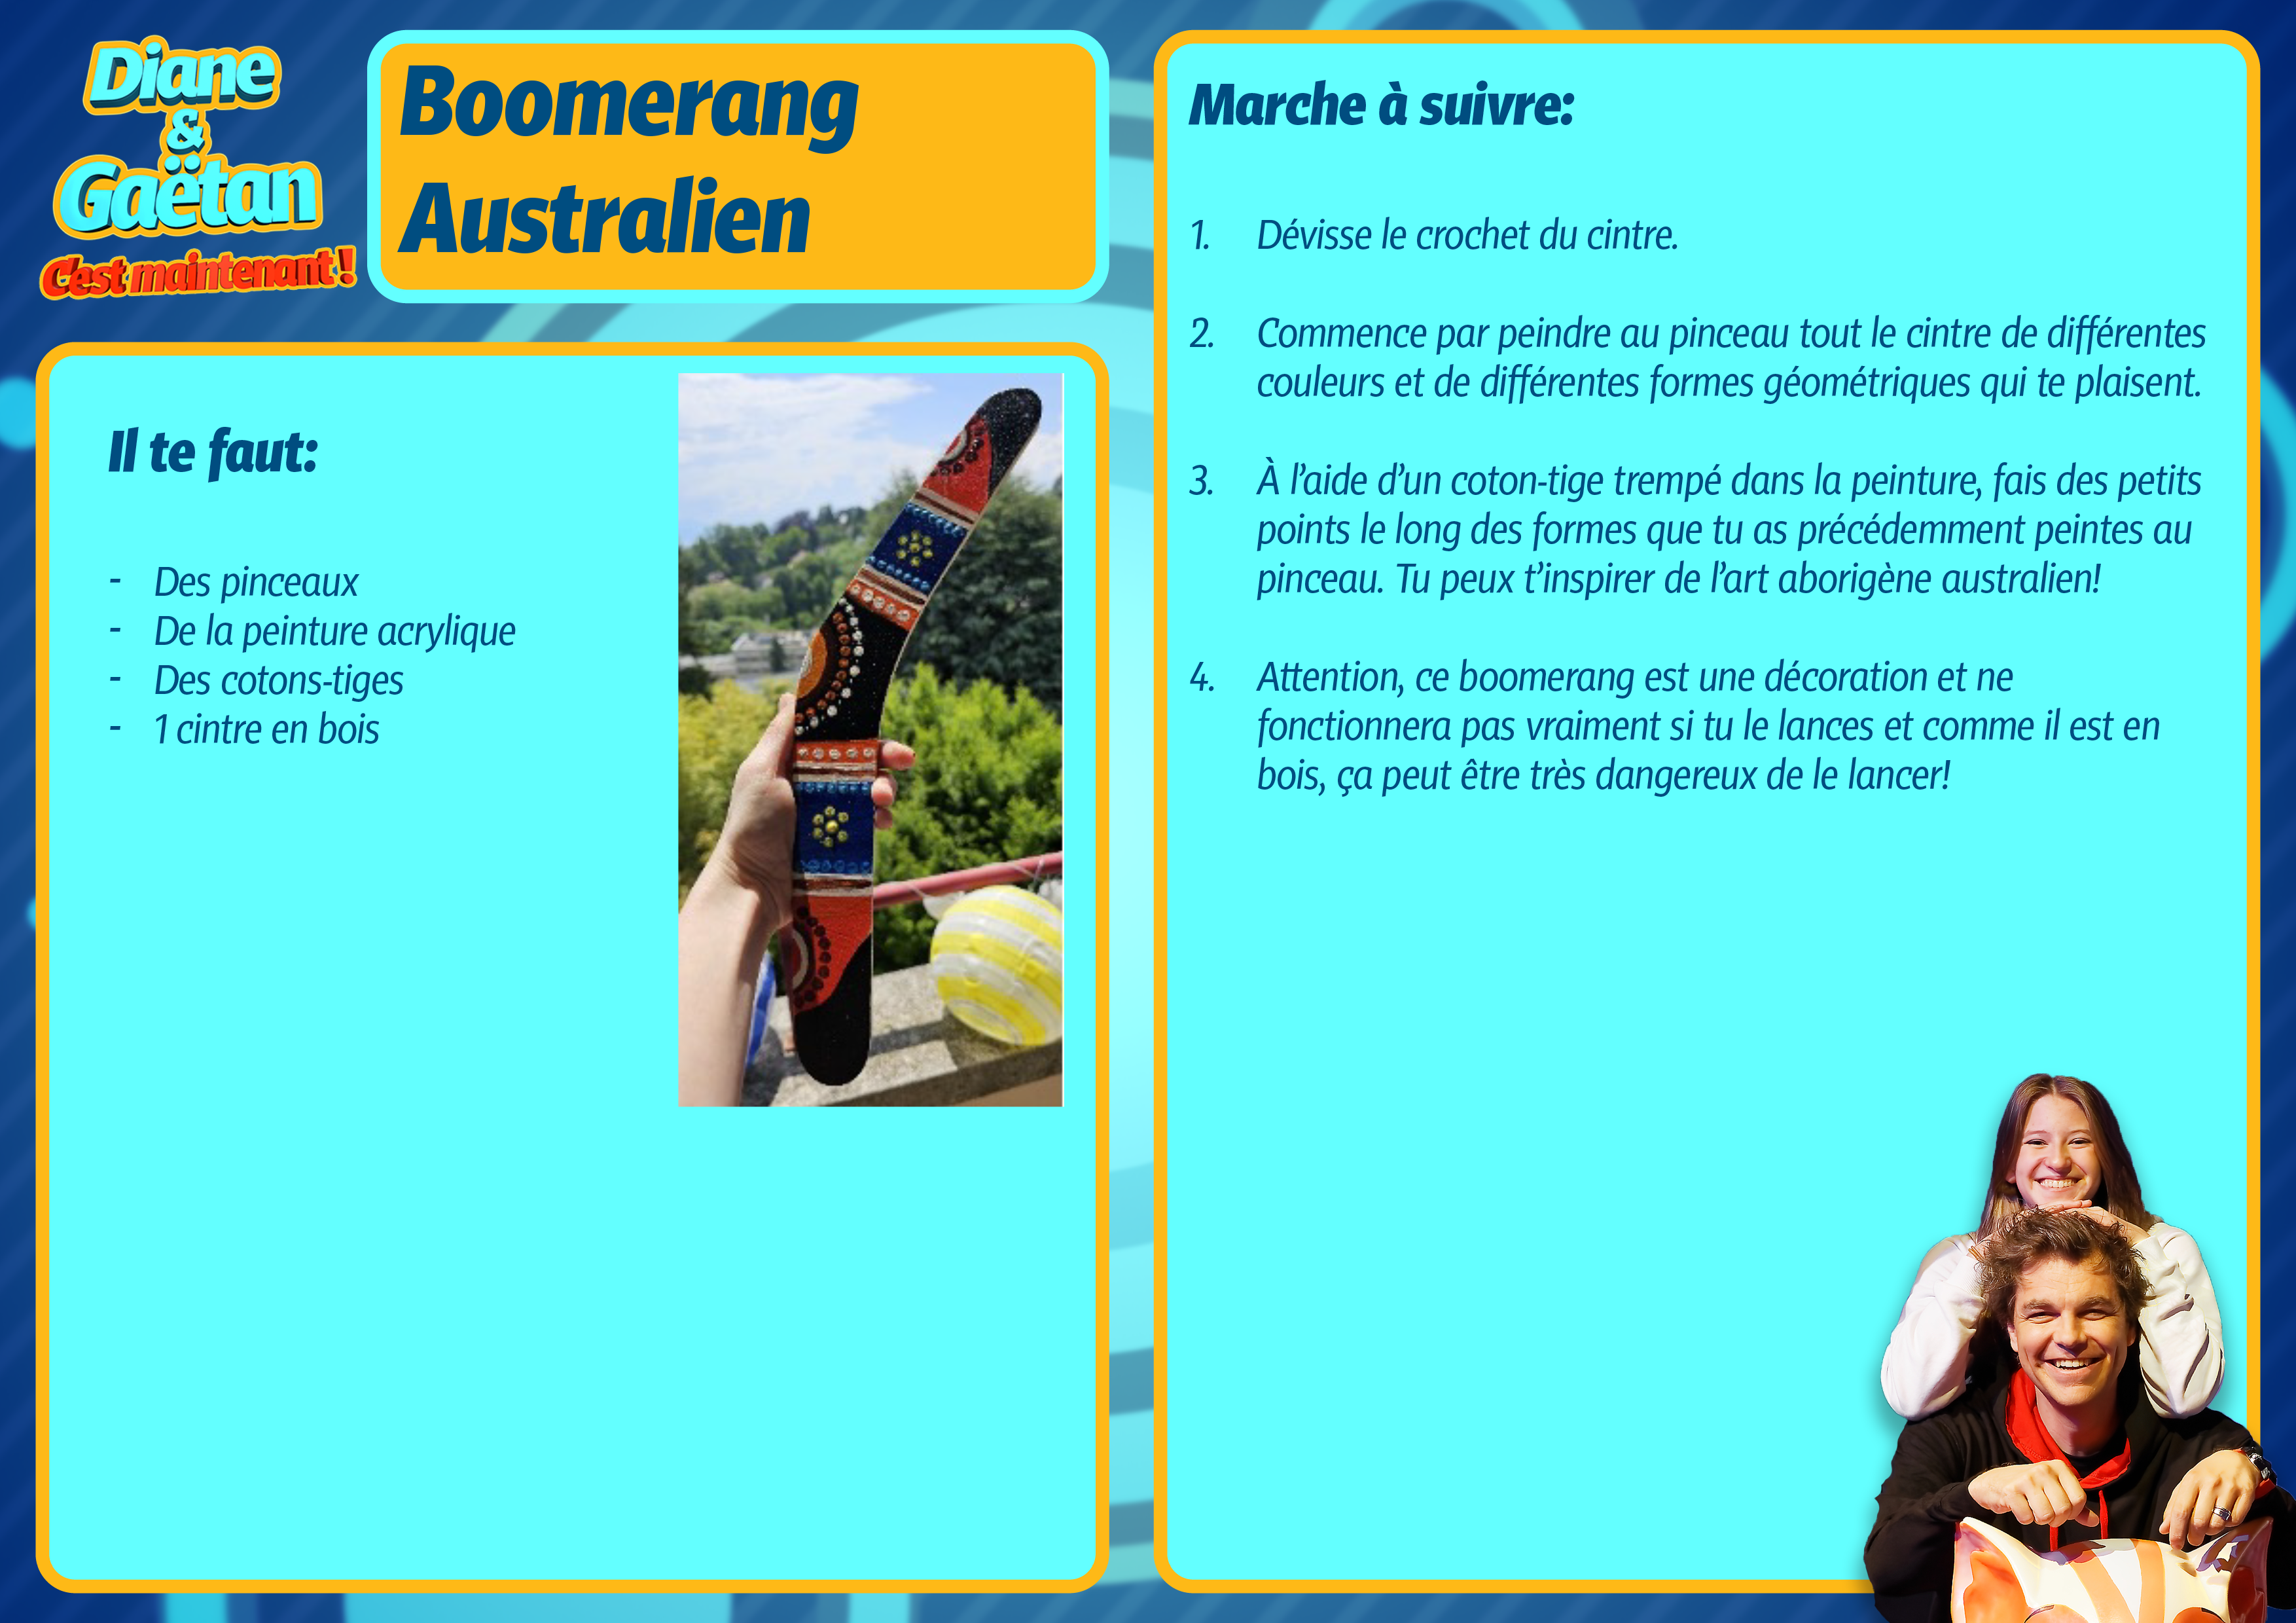 Le boomerang australien [RTS]